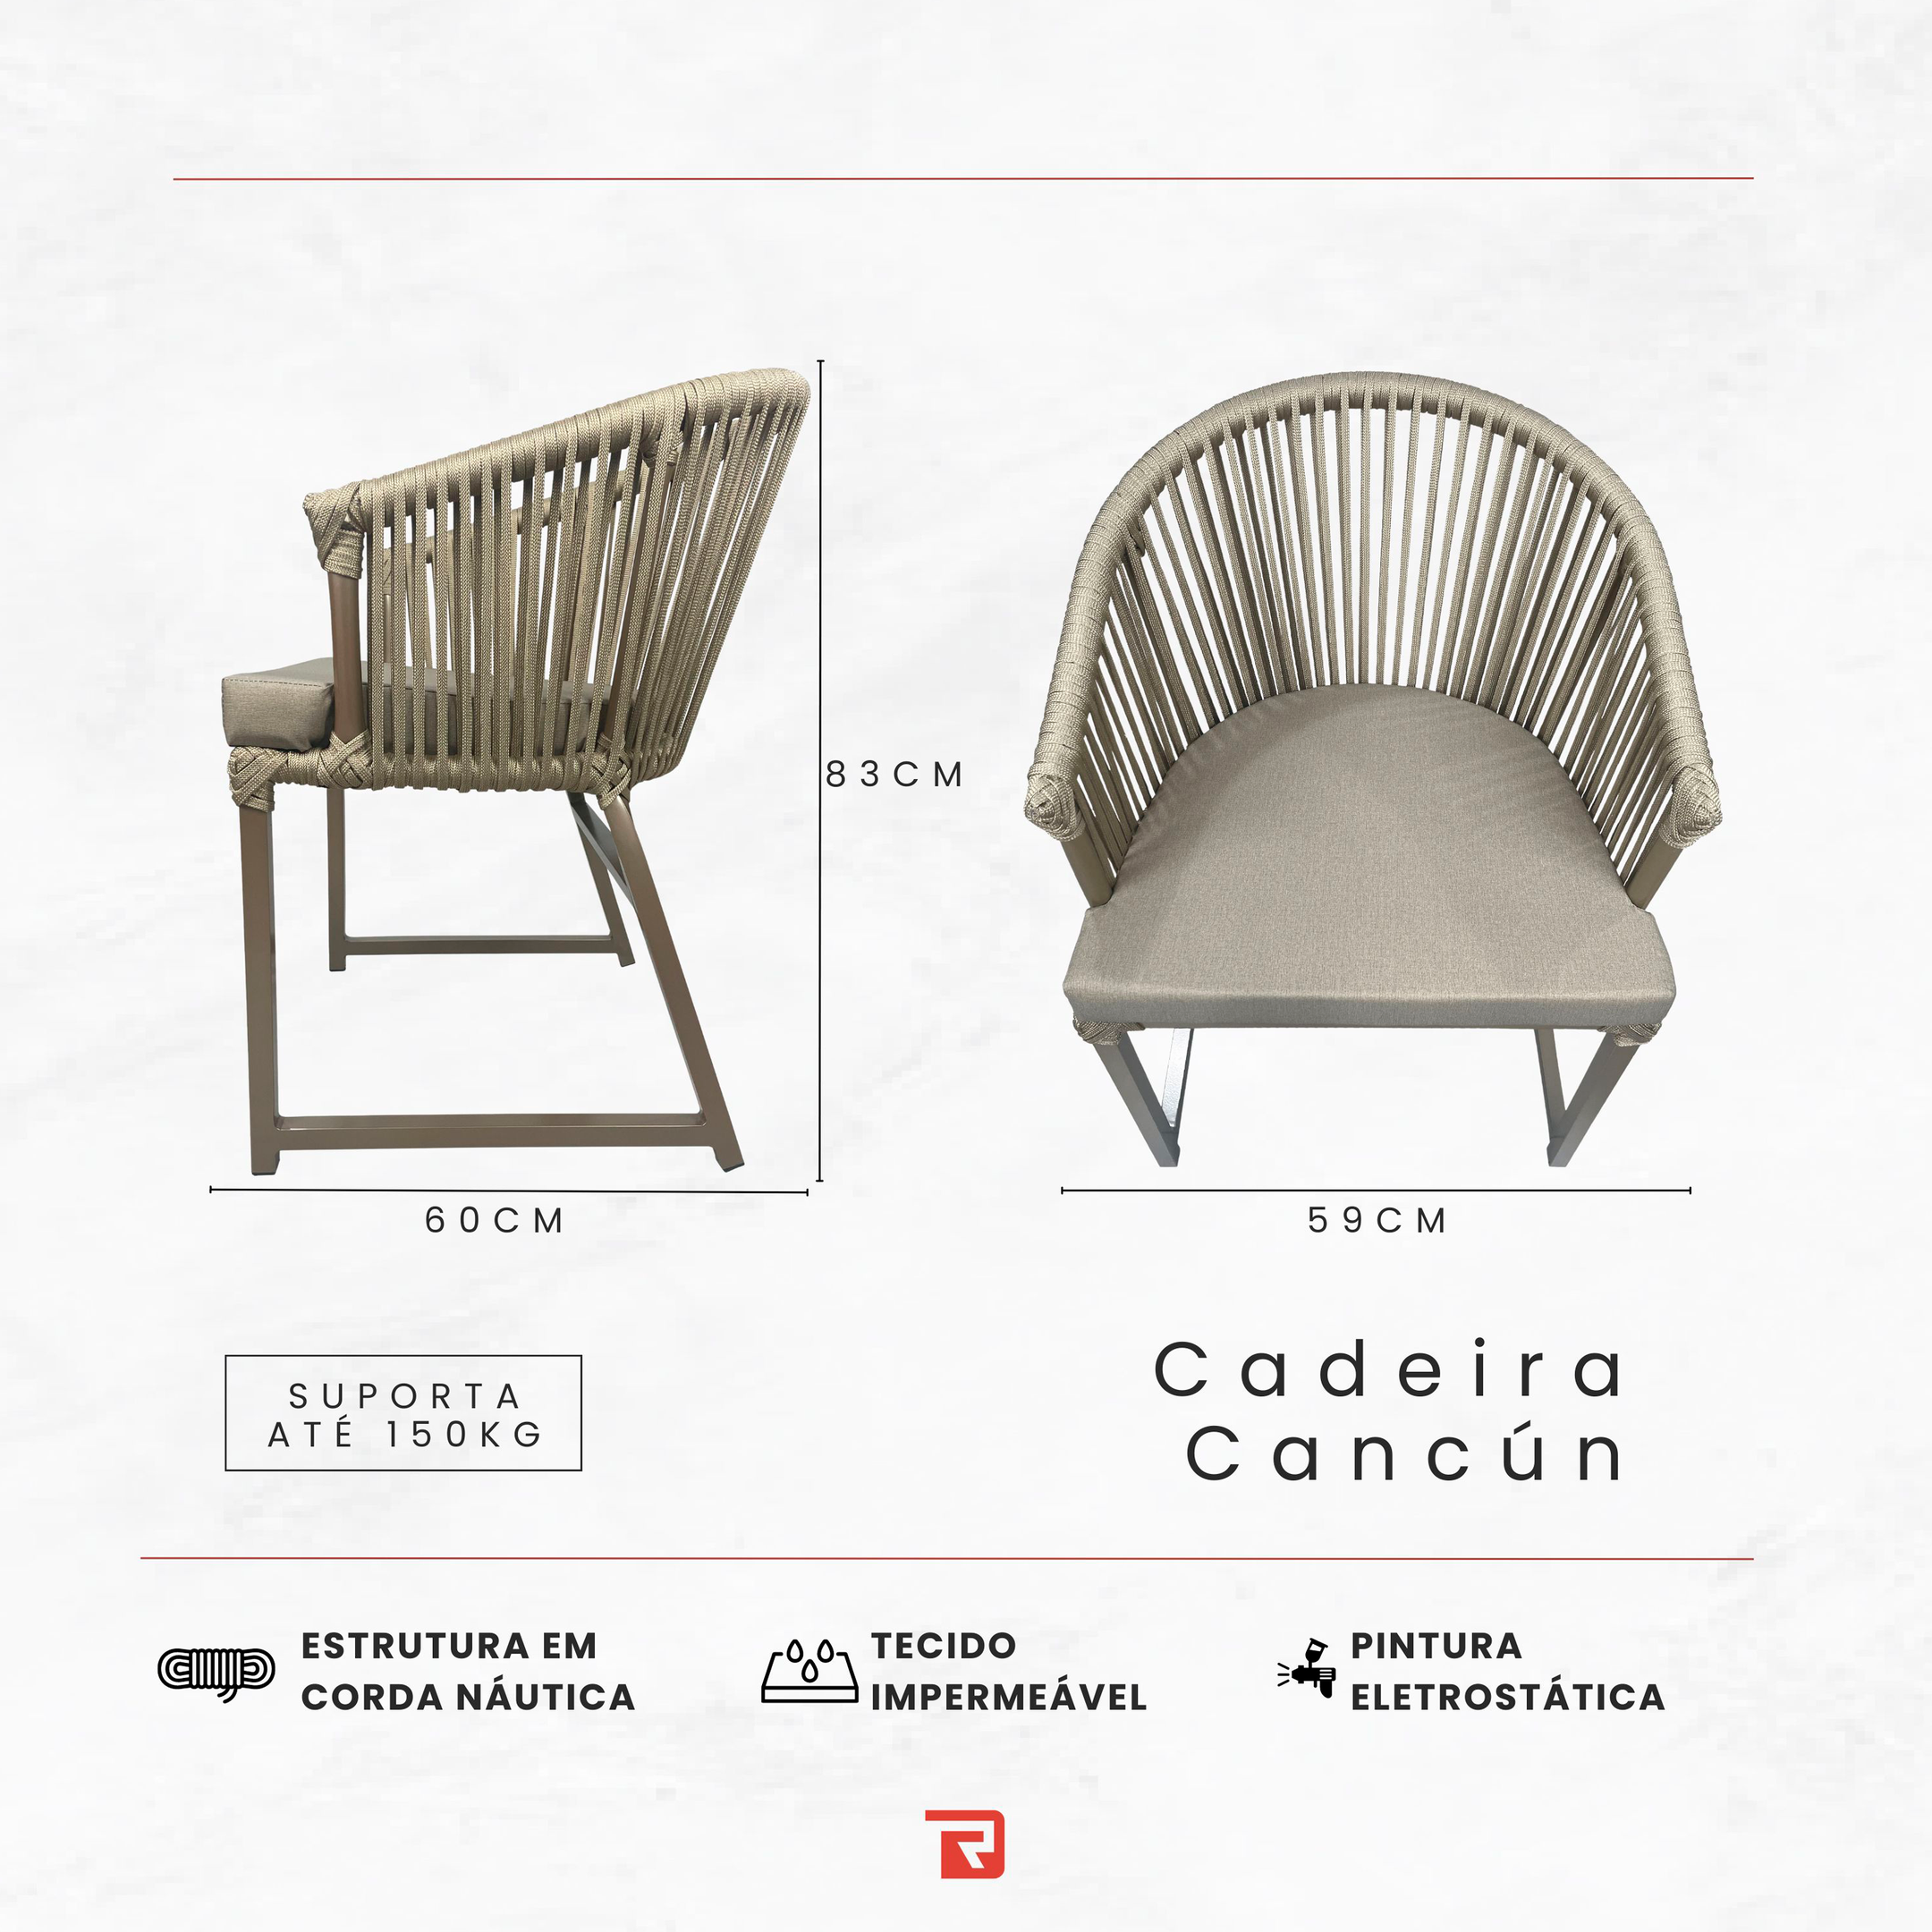 Cadeira Cancún - Alumínio Pintado Champagne, Corda Náutica Jardim Varanda Área Externa - Rami - 6